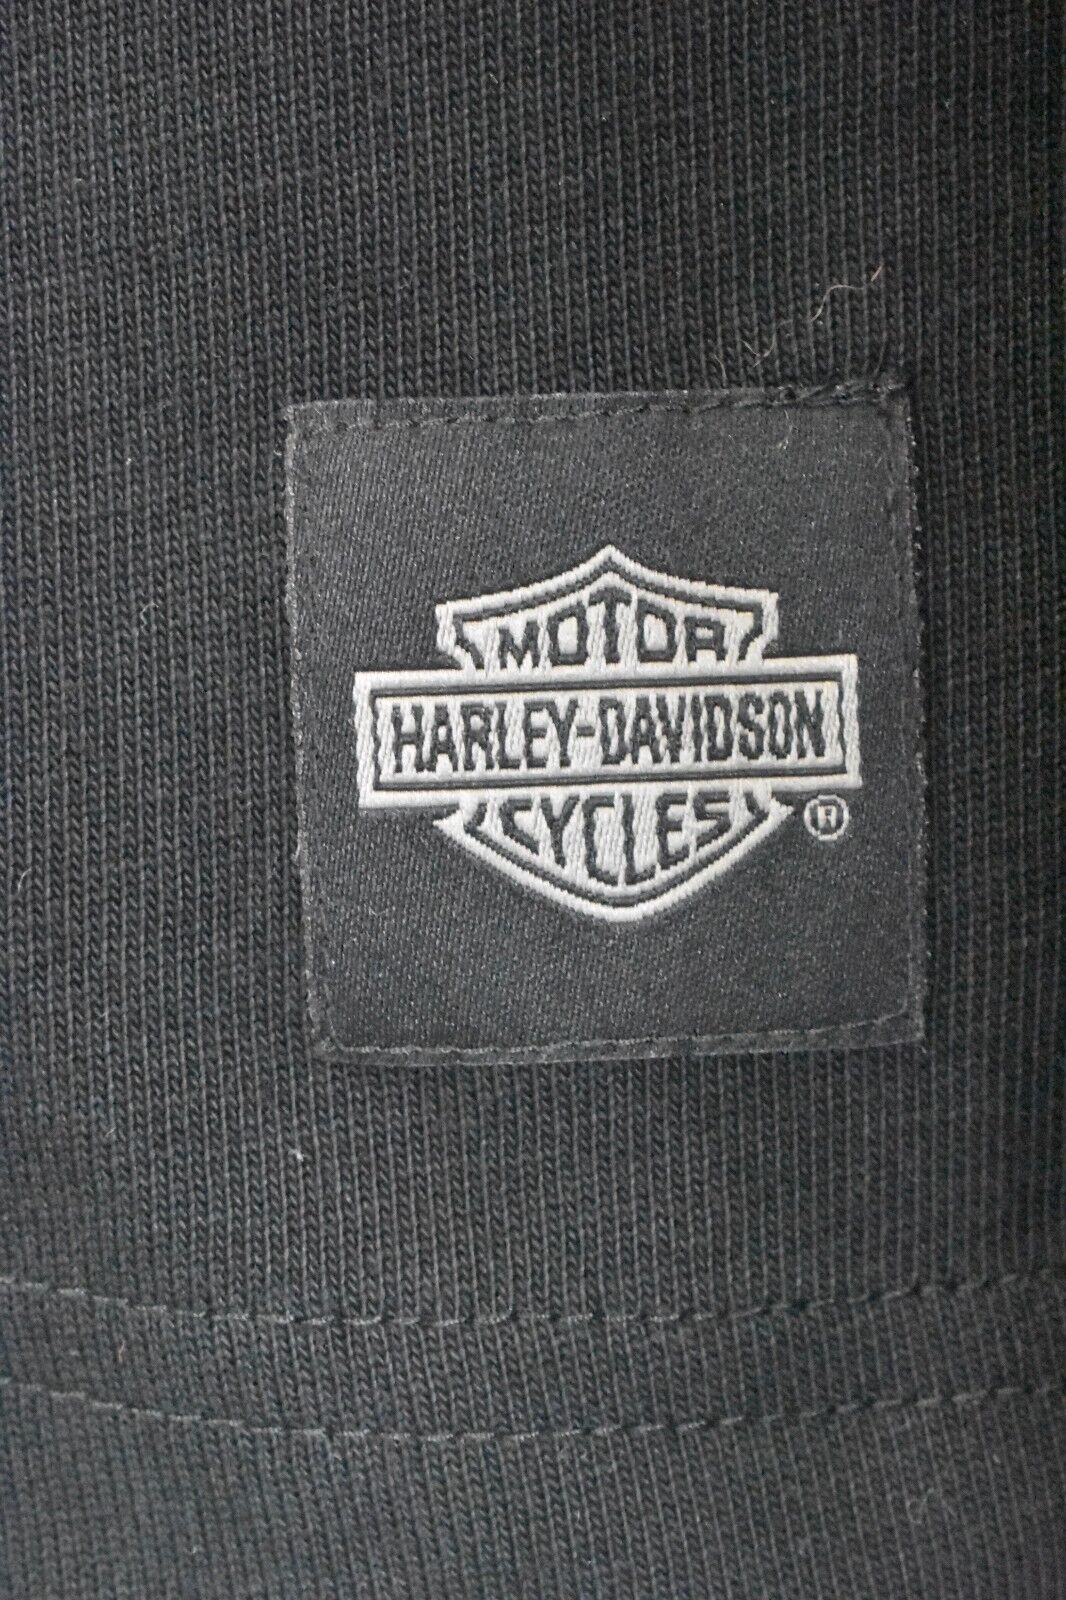 Harley-Davidson Men's Henley T-Shirt Navy Blue Colorblock HD-MC Long Sleeve